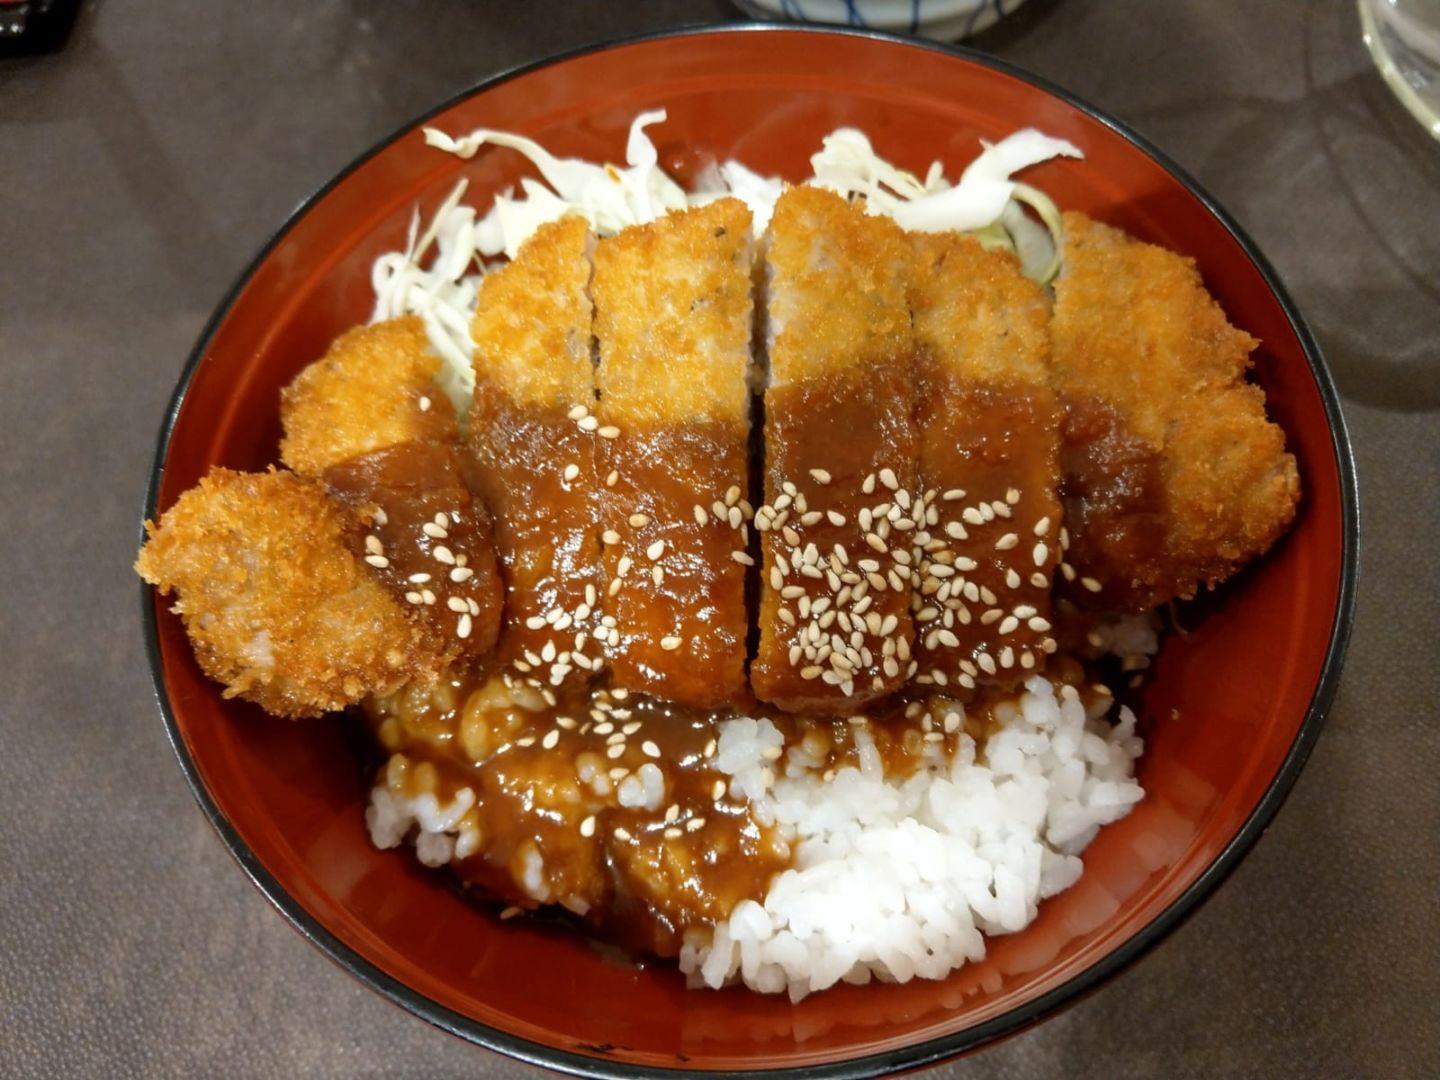 tonkatsu miso nagoya meshi ricetta tonkatsu giapponese cotoletta di maiale impanata